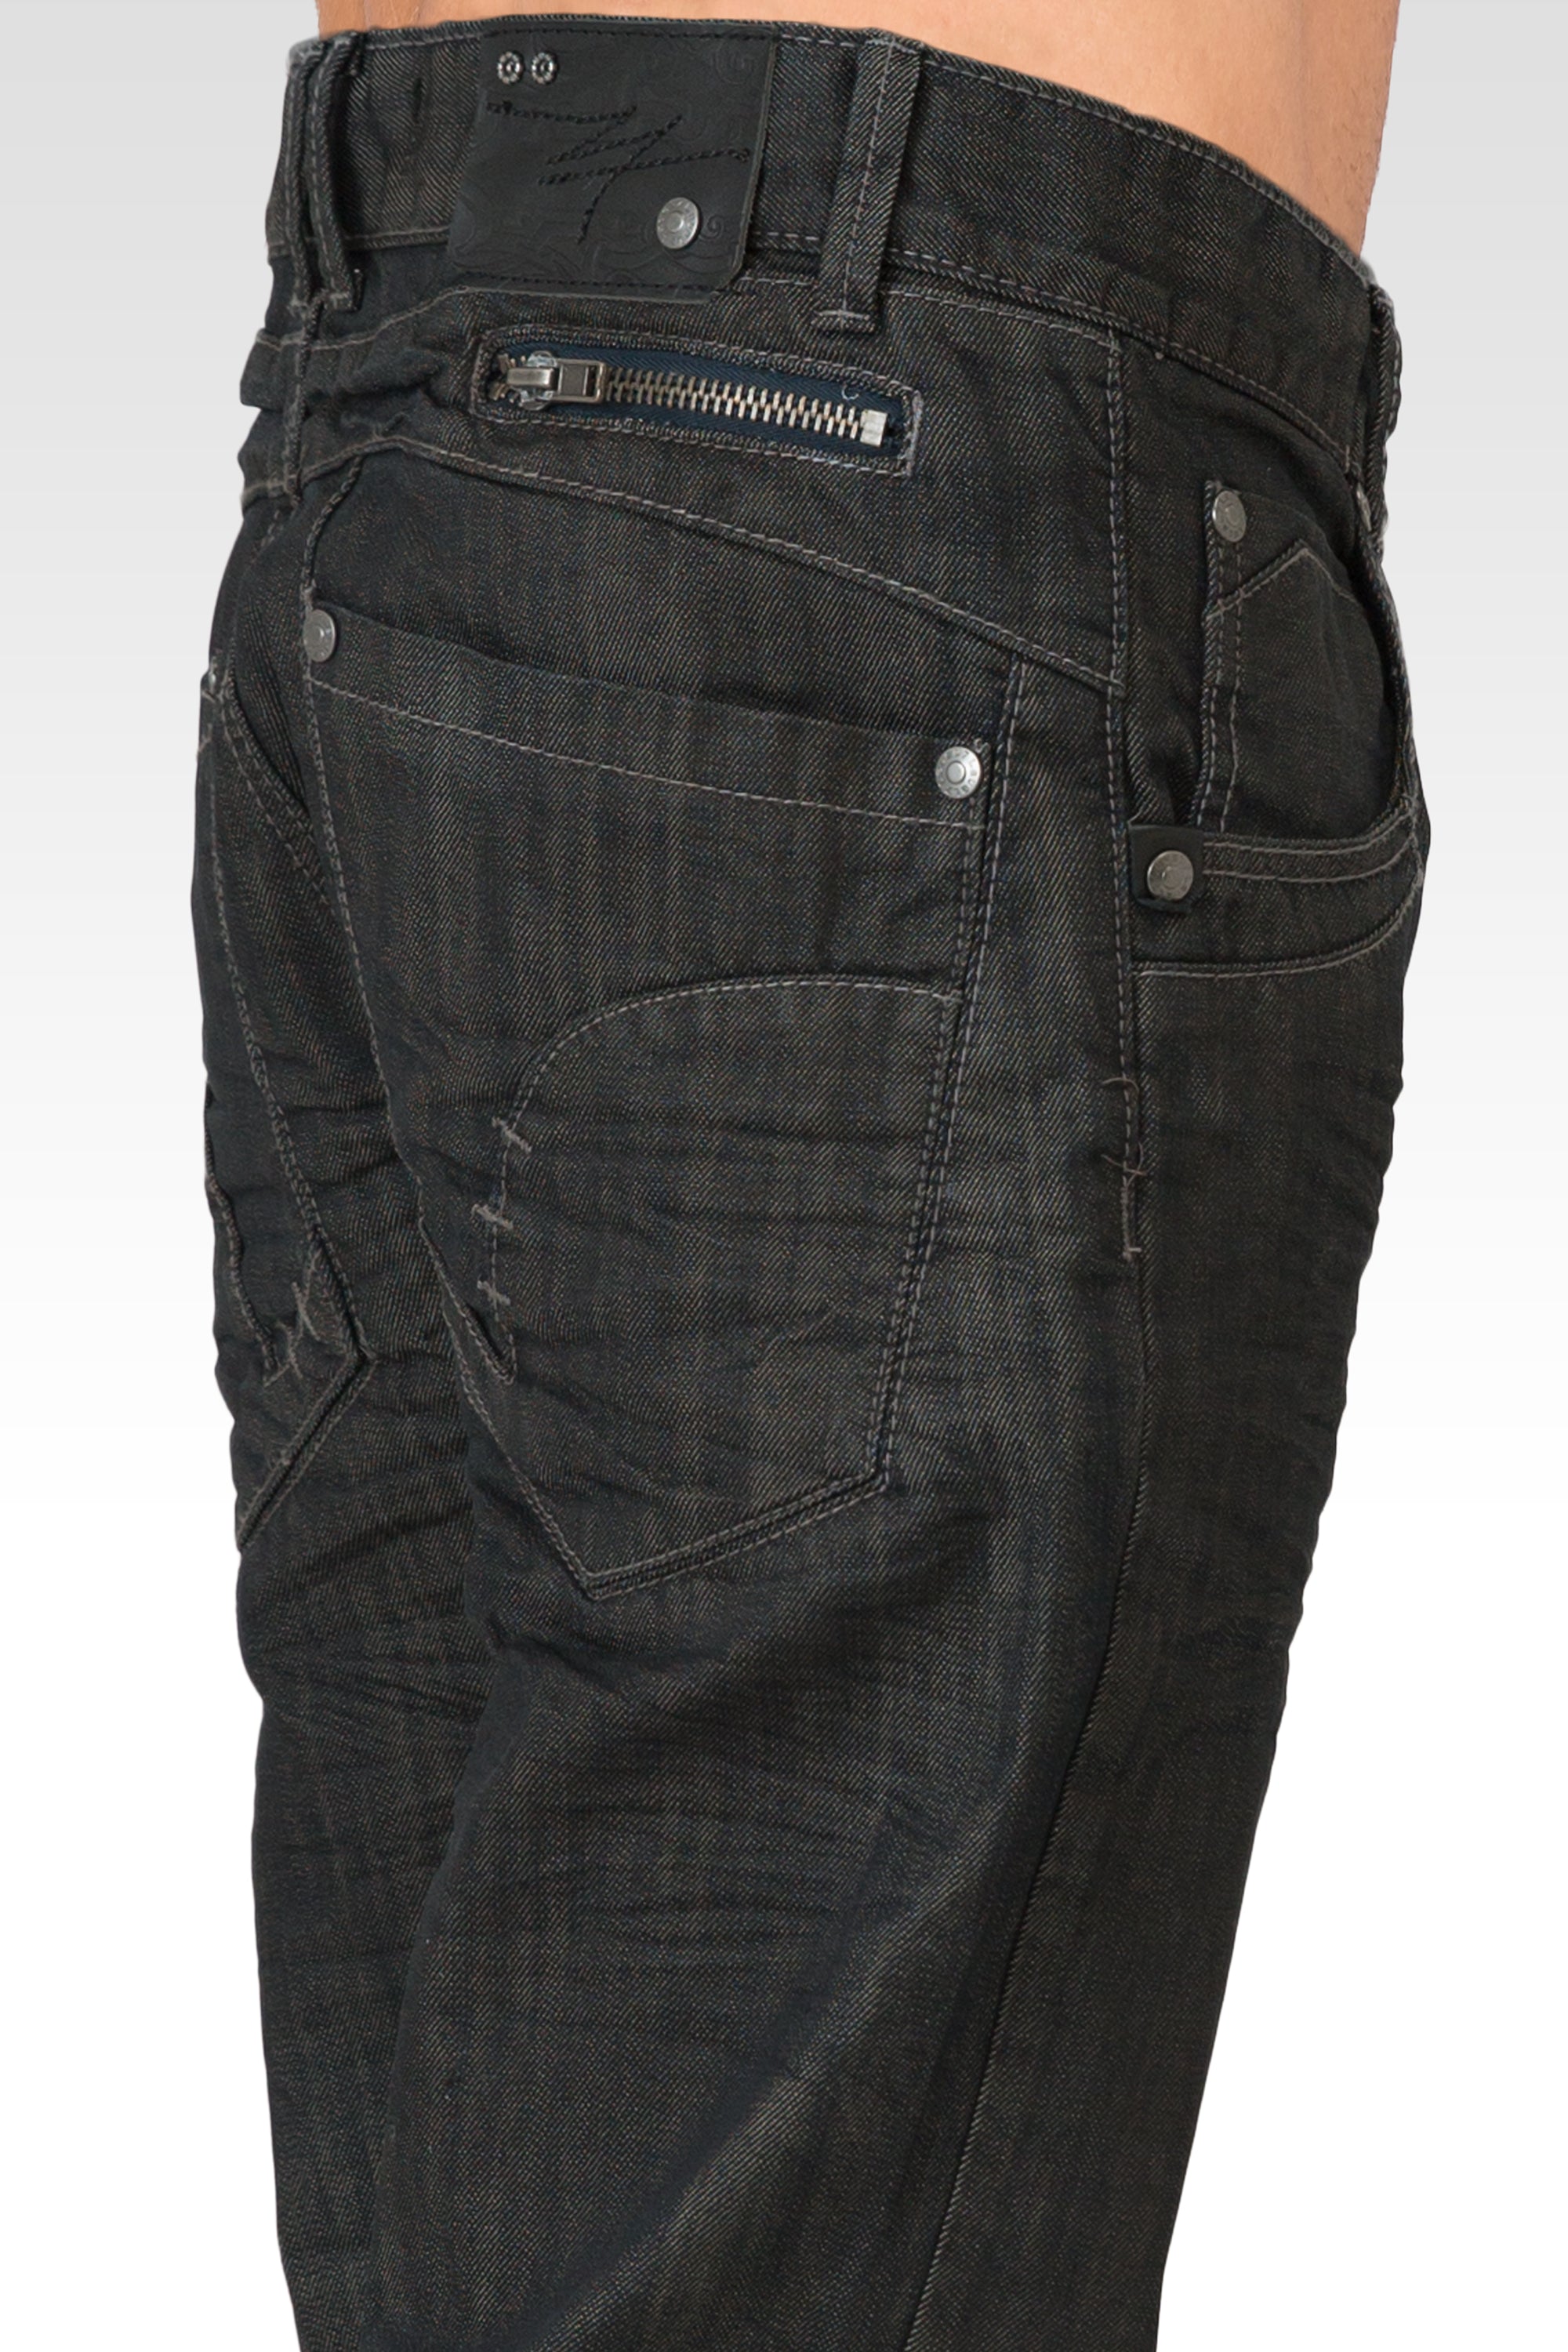 Allthemen Men's Zipper Straight Fit Casual Jeans